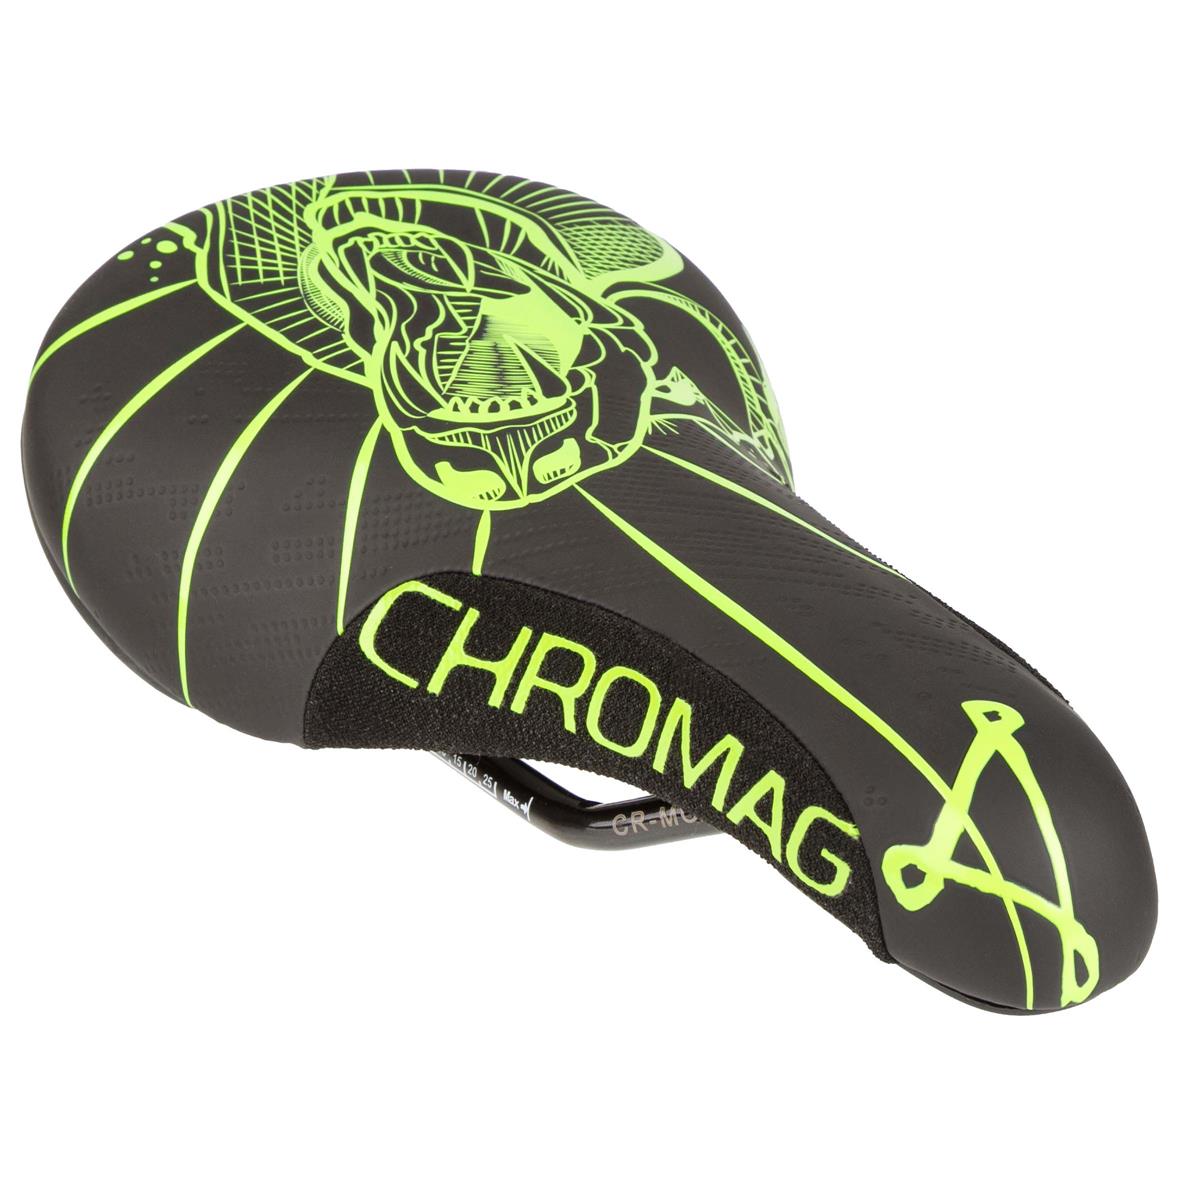 Chromag Saddle Overture 2019 243 x 136 mm, Black/Tight Green